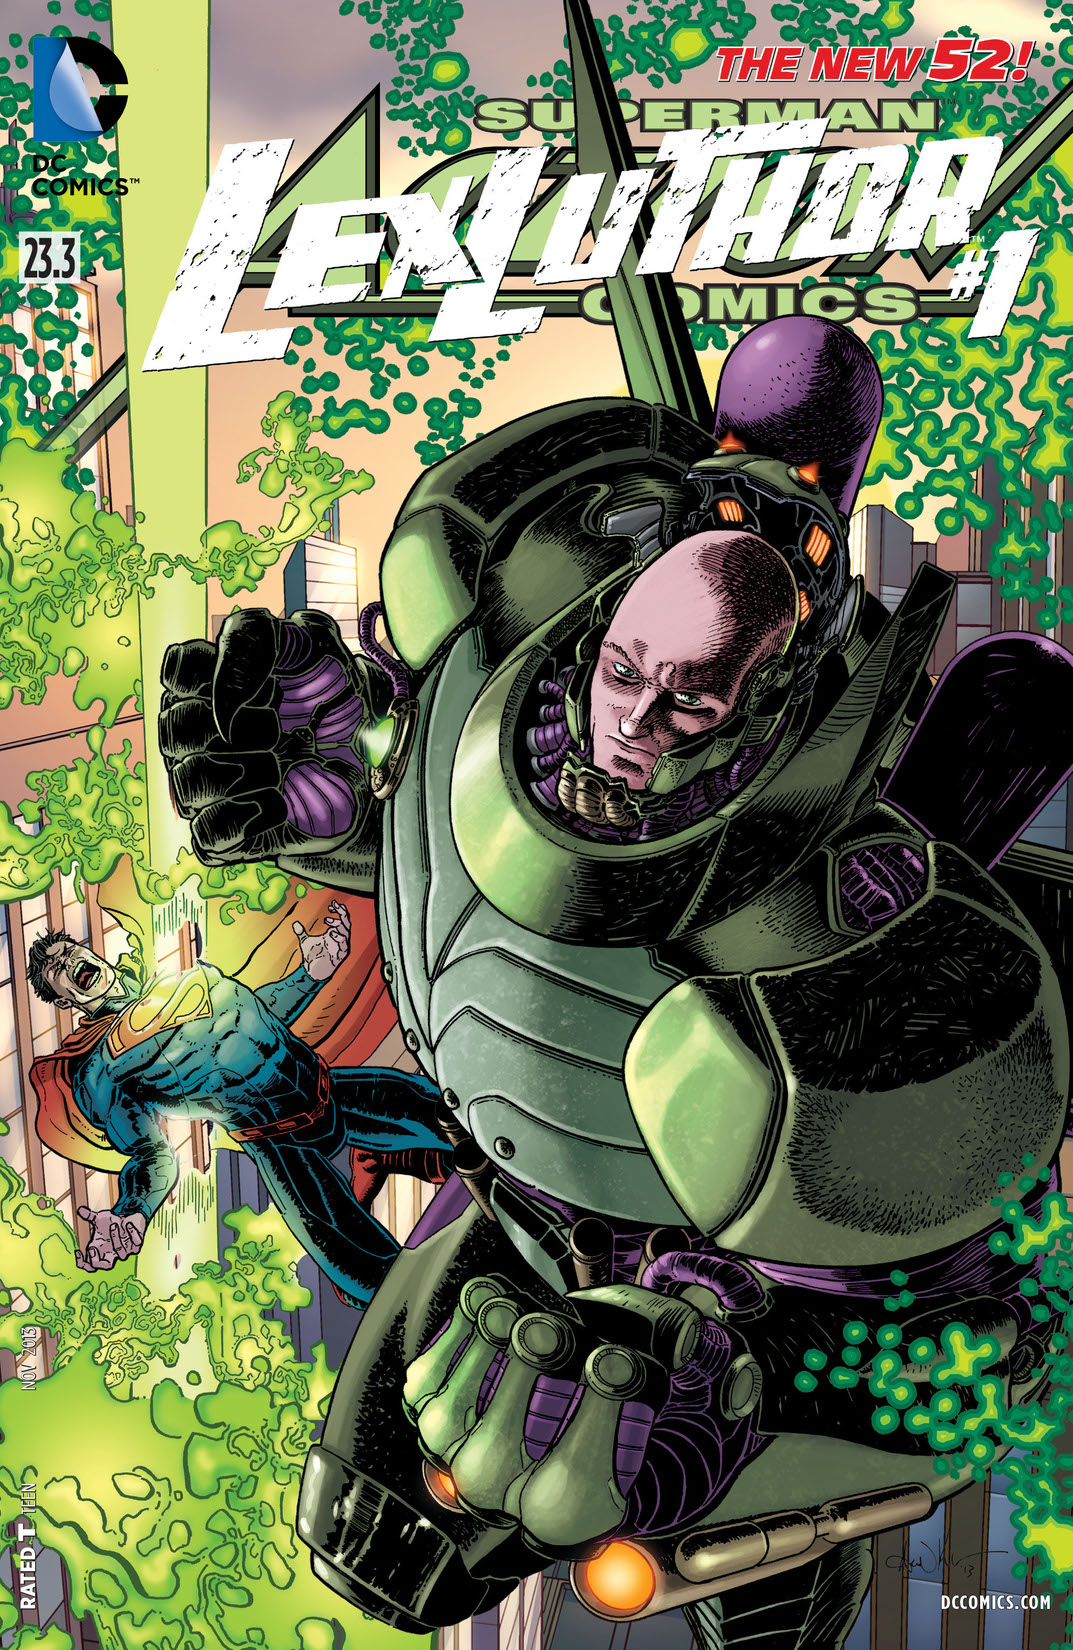 Action Comics feat Lex Luthor (2013-) #23.3 preview images